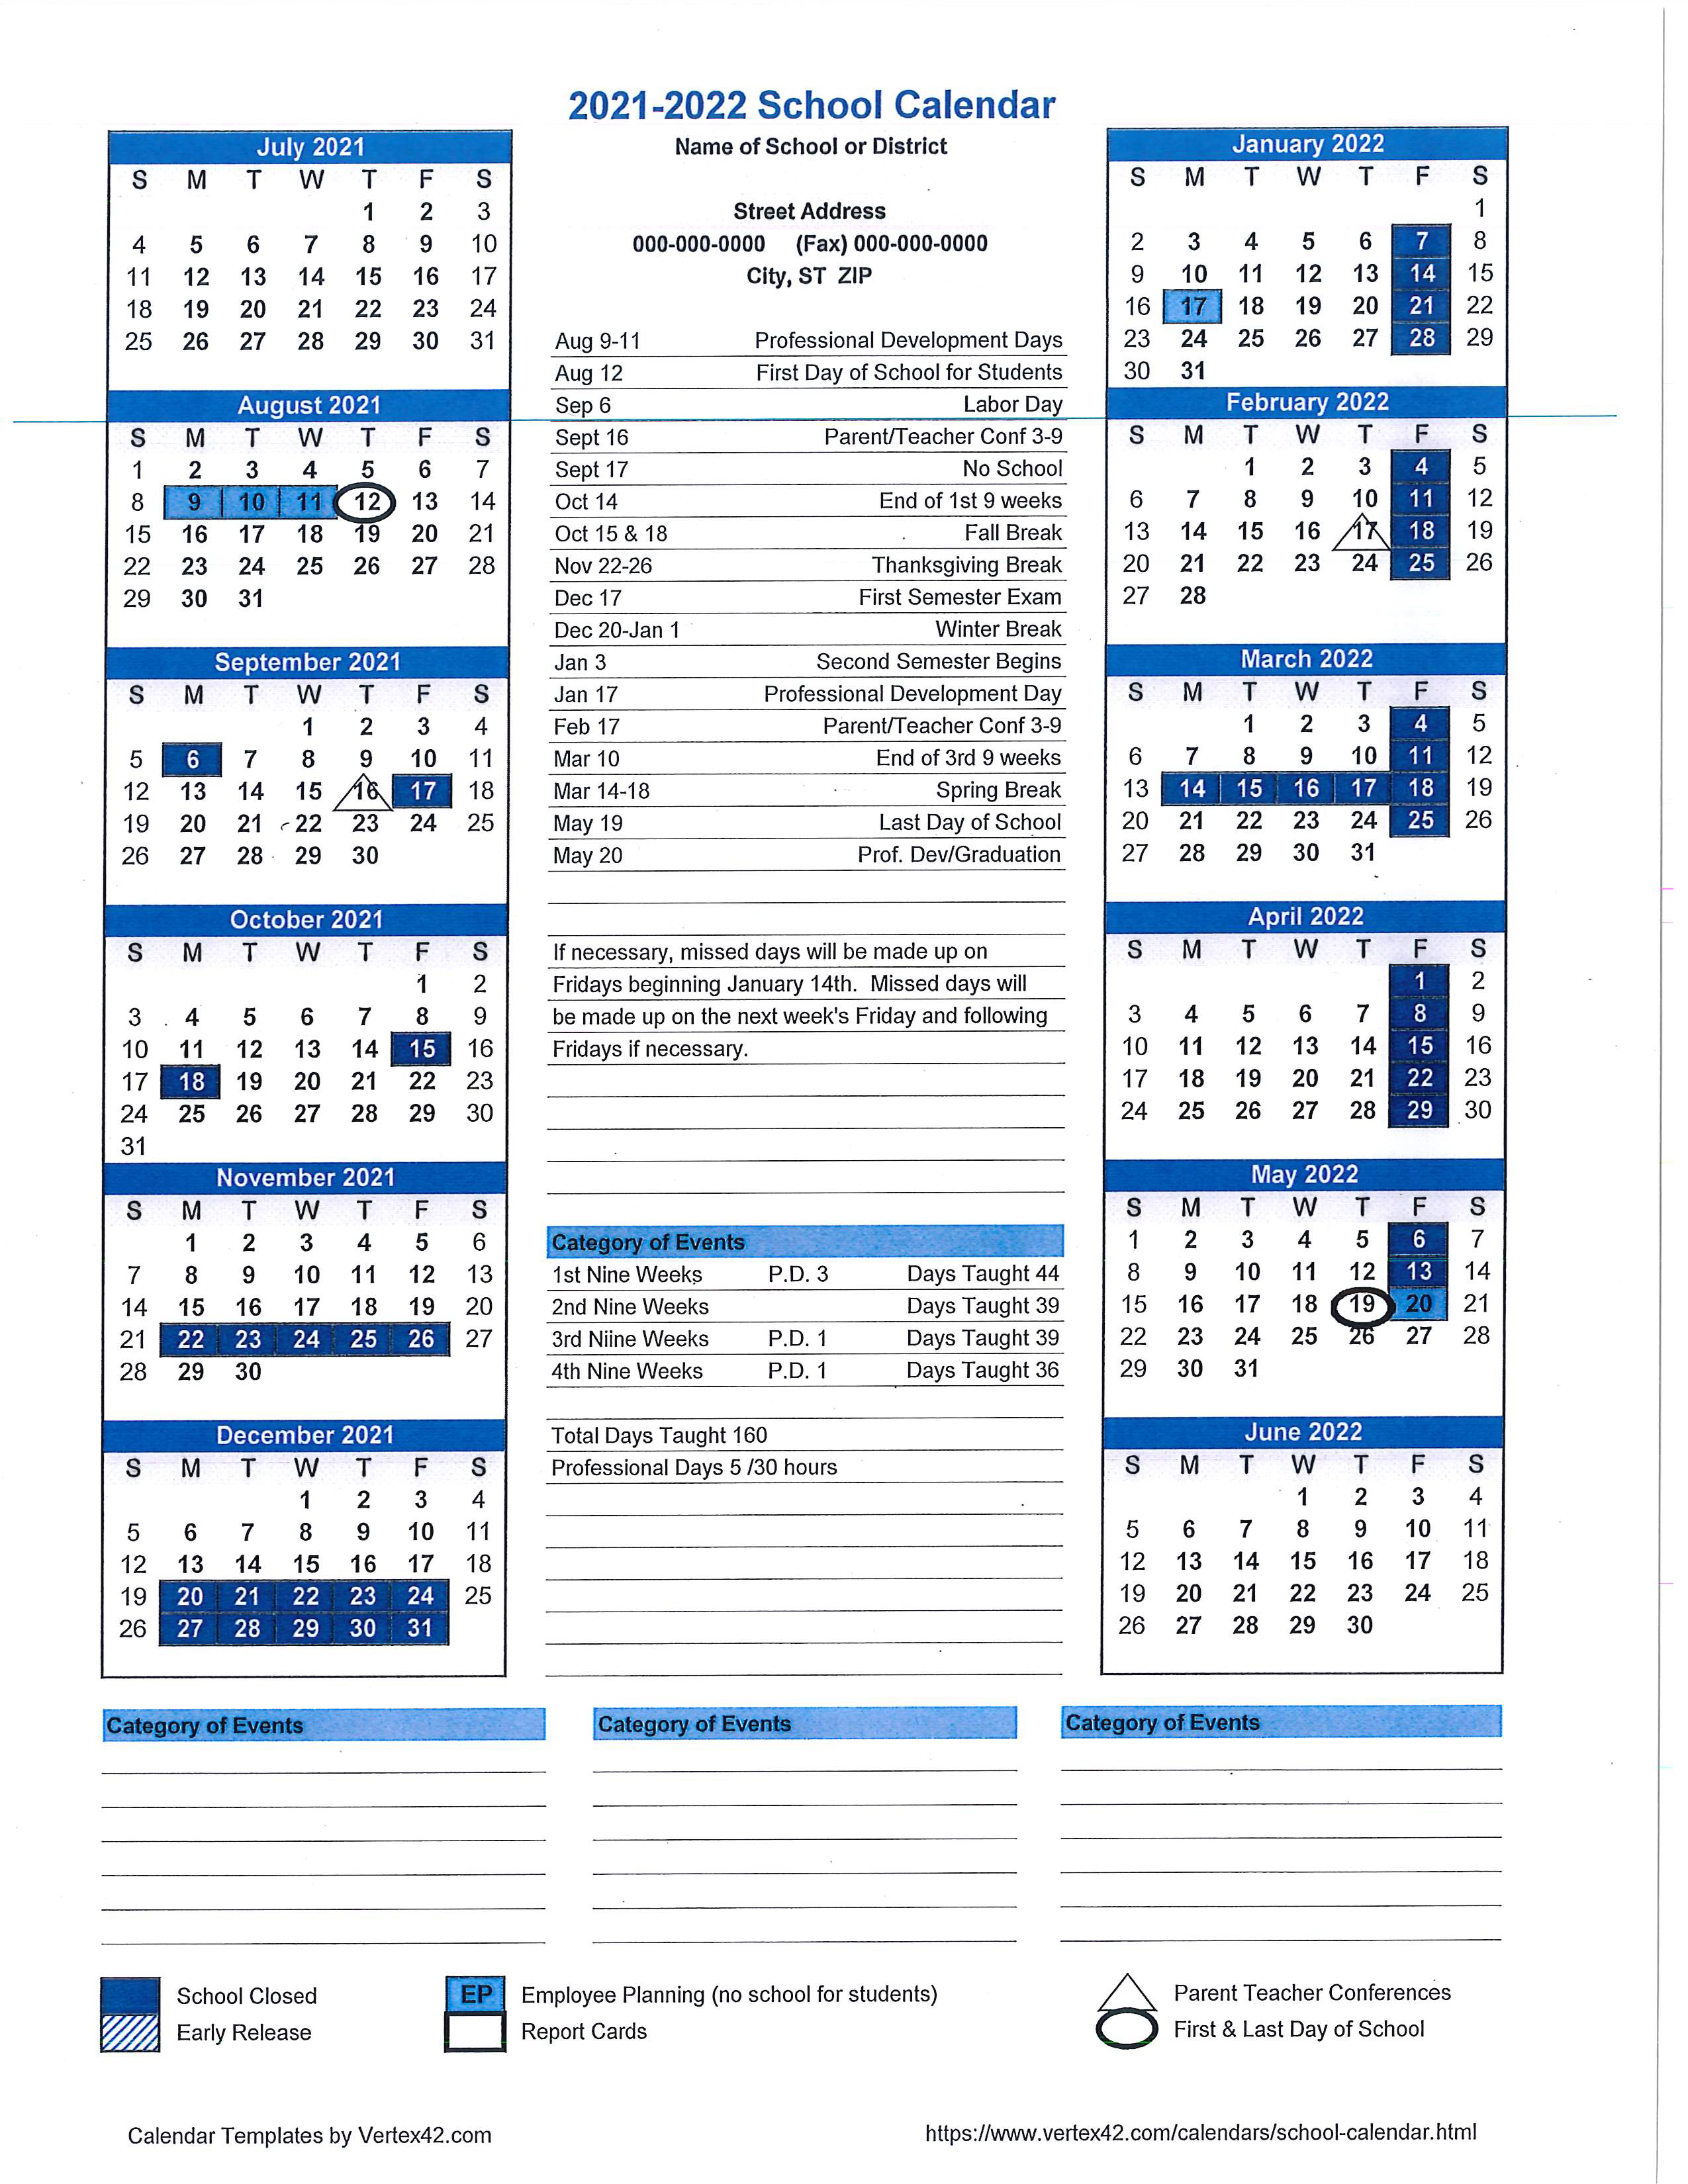 Spiro School District 21-22 School Calendar